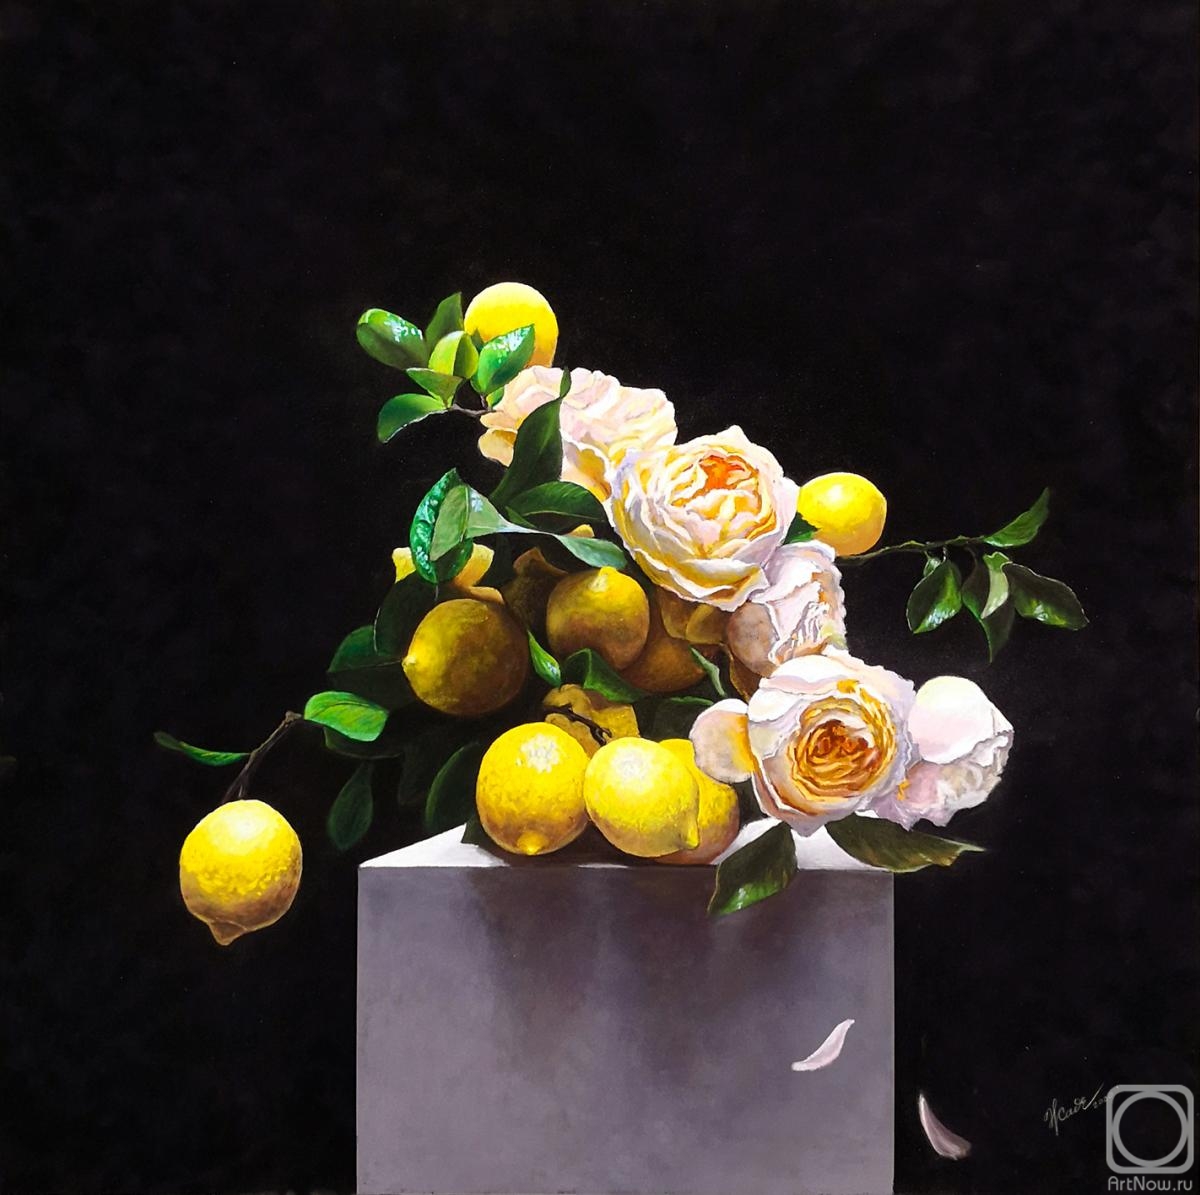 Zhadenova Natalya. Lemons and tea roses